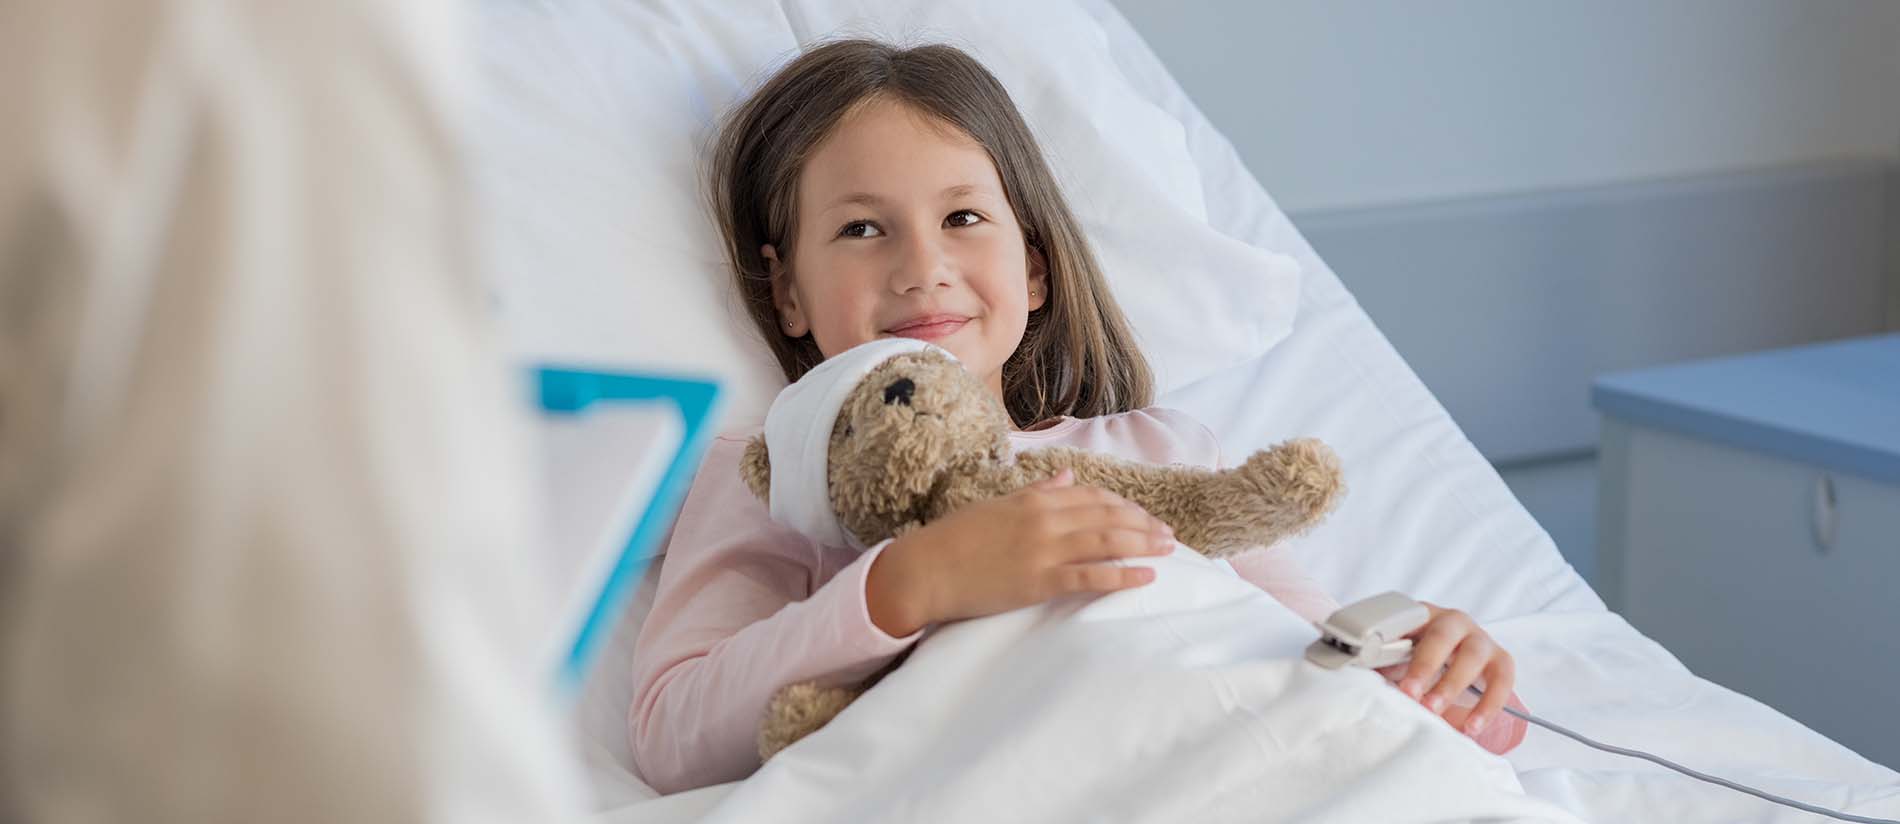 girl hold teddy bear in hospital bed